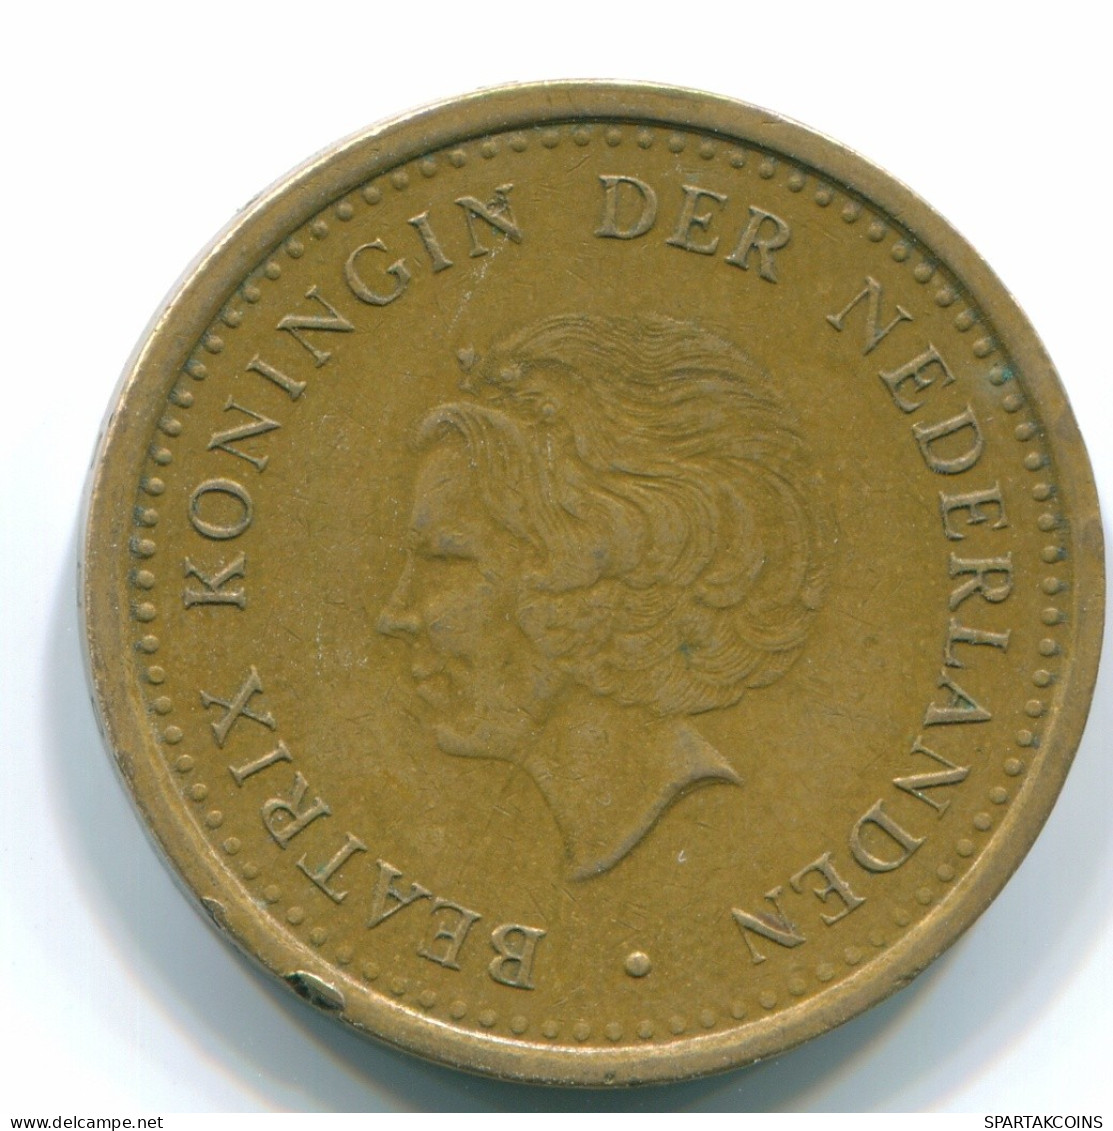 1 GULDEN 1992 NETHERLANDS ANTILLES Aureate Steel Colonial Coin #S12140.U.A - Antille Olandesi